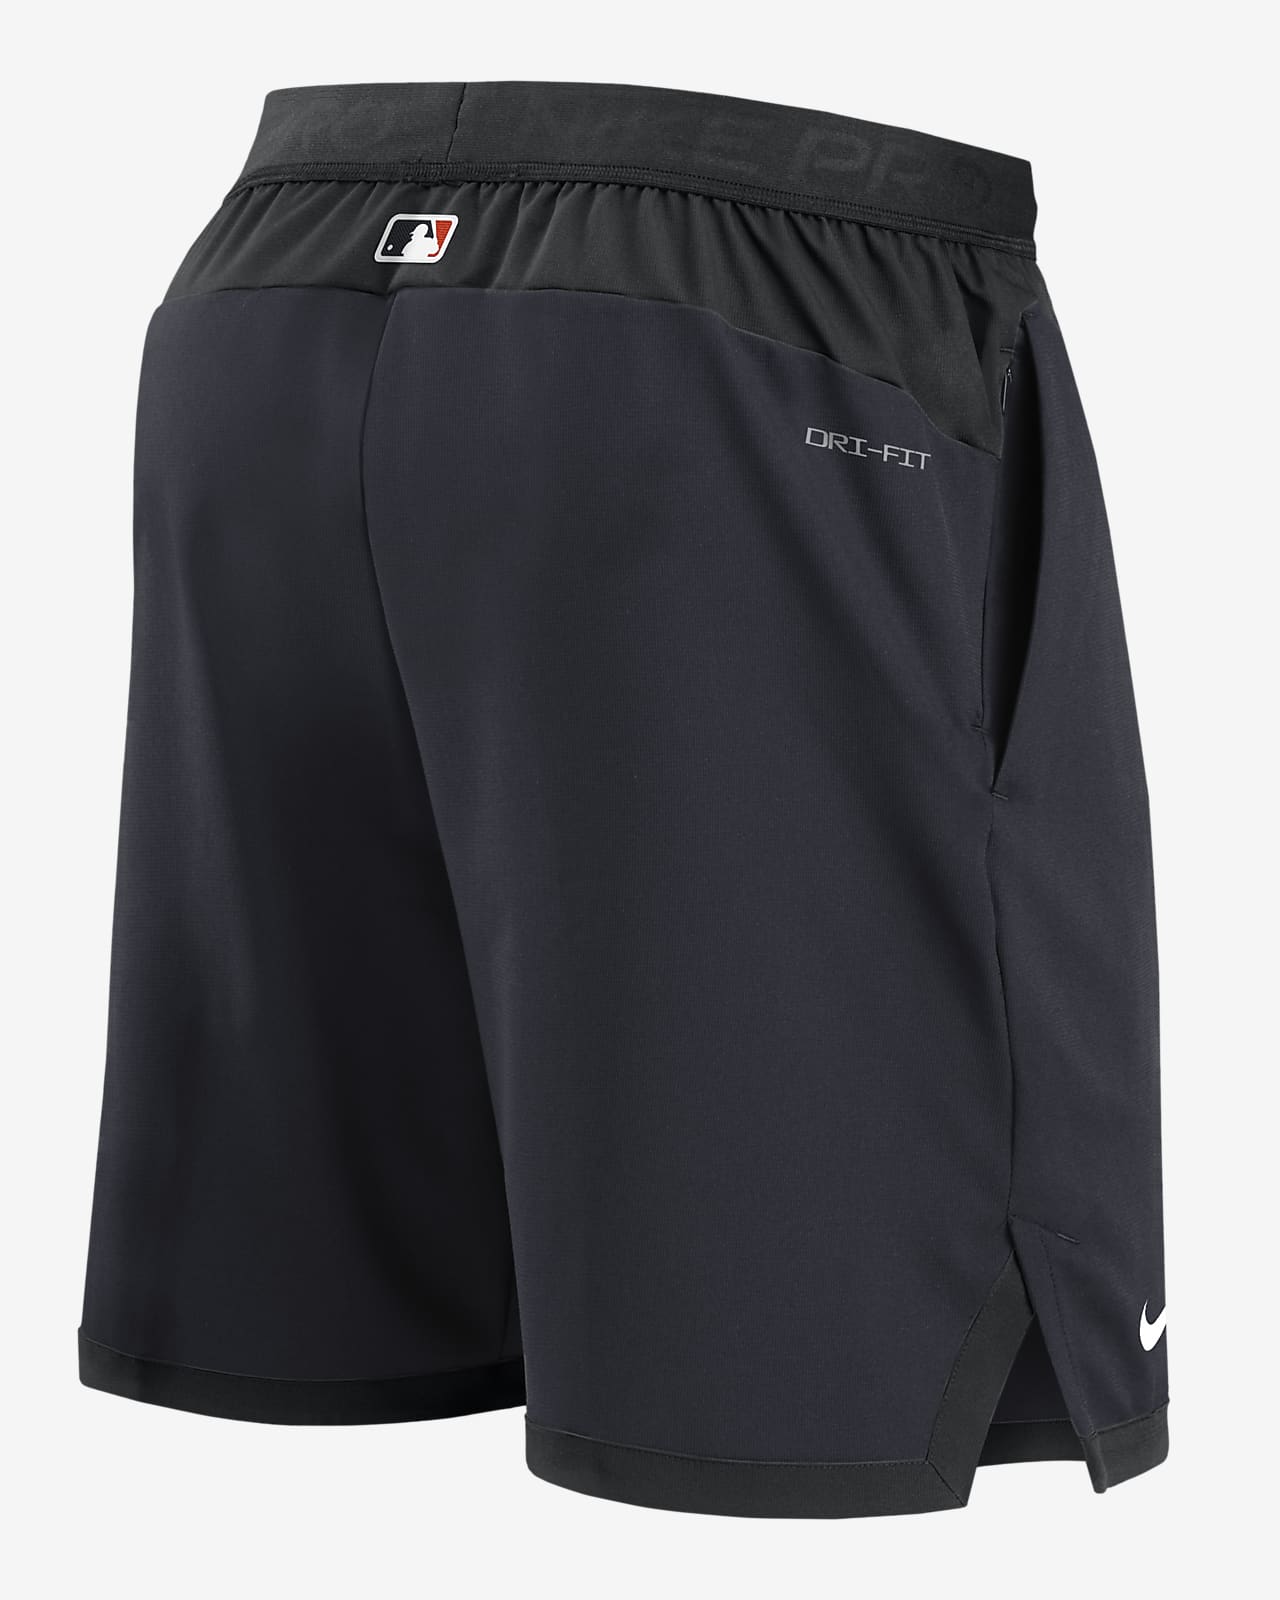 Nike Dri-FIT Flex (MLB Detroit Tigers) Men's Shorts.